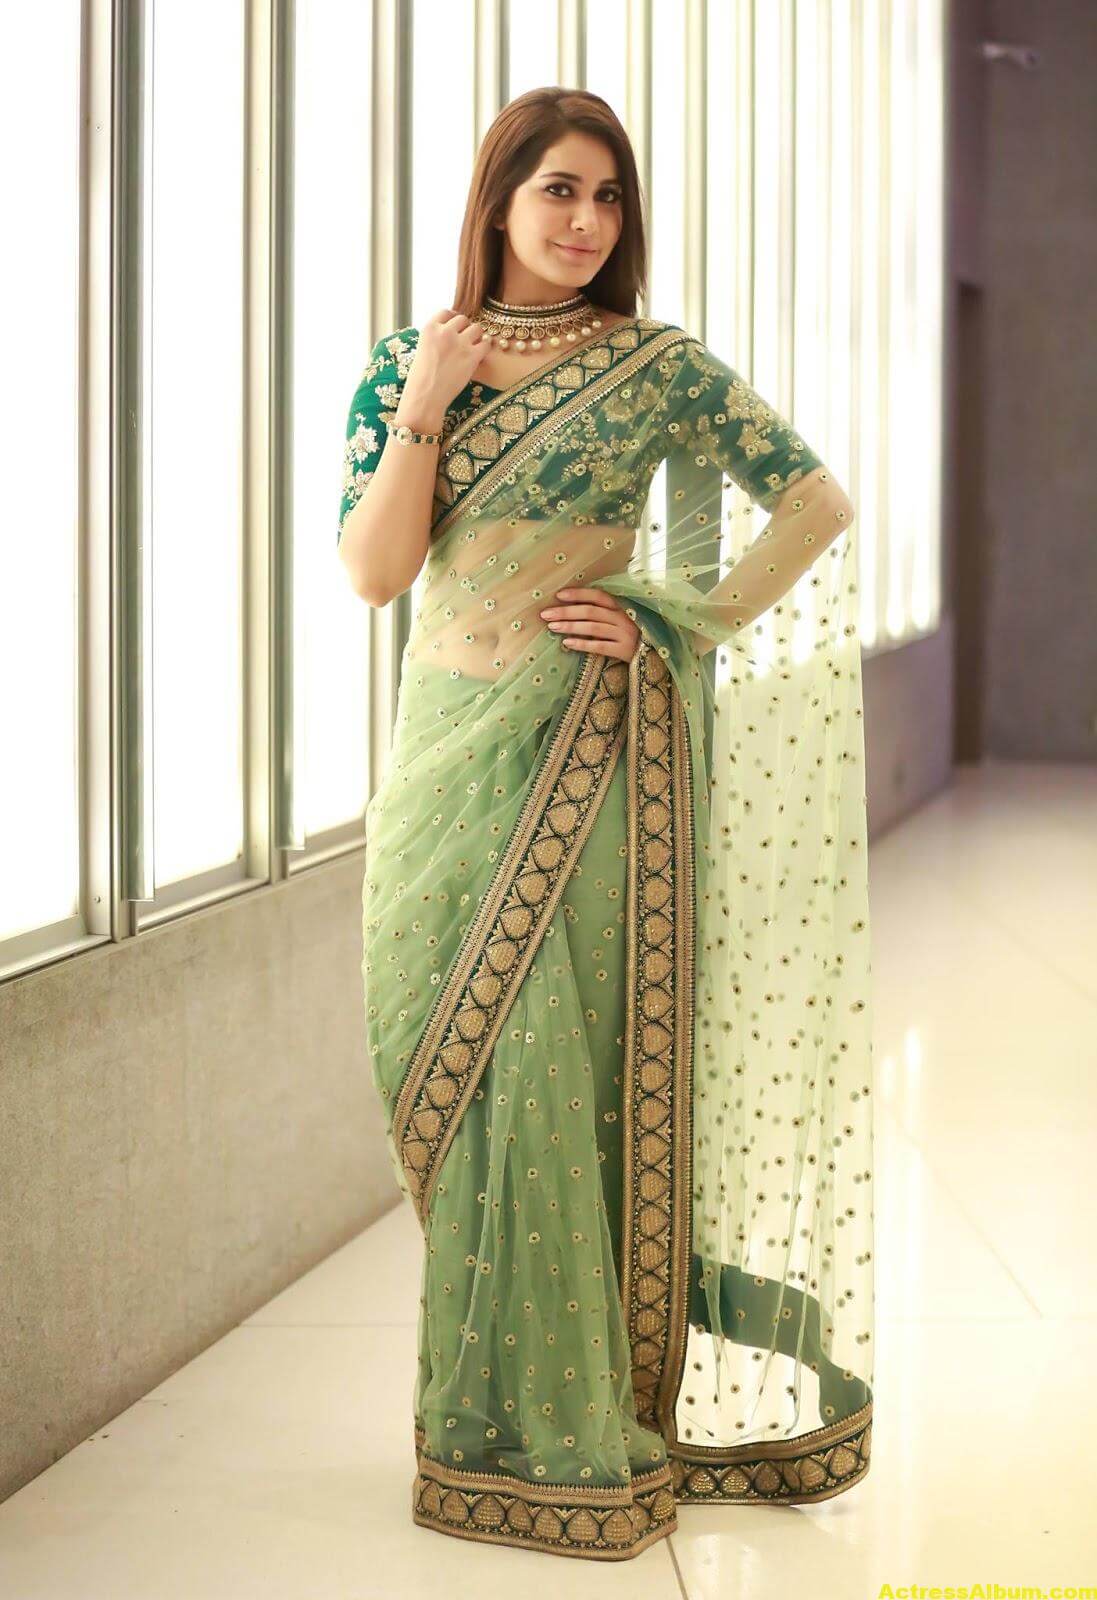 Rashi Khanna Spicy Photos In Green Saree 1 Actress Album 